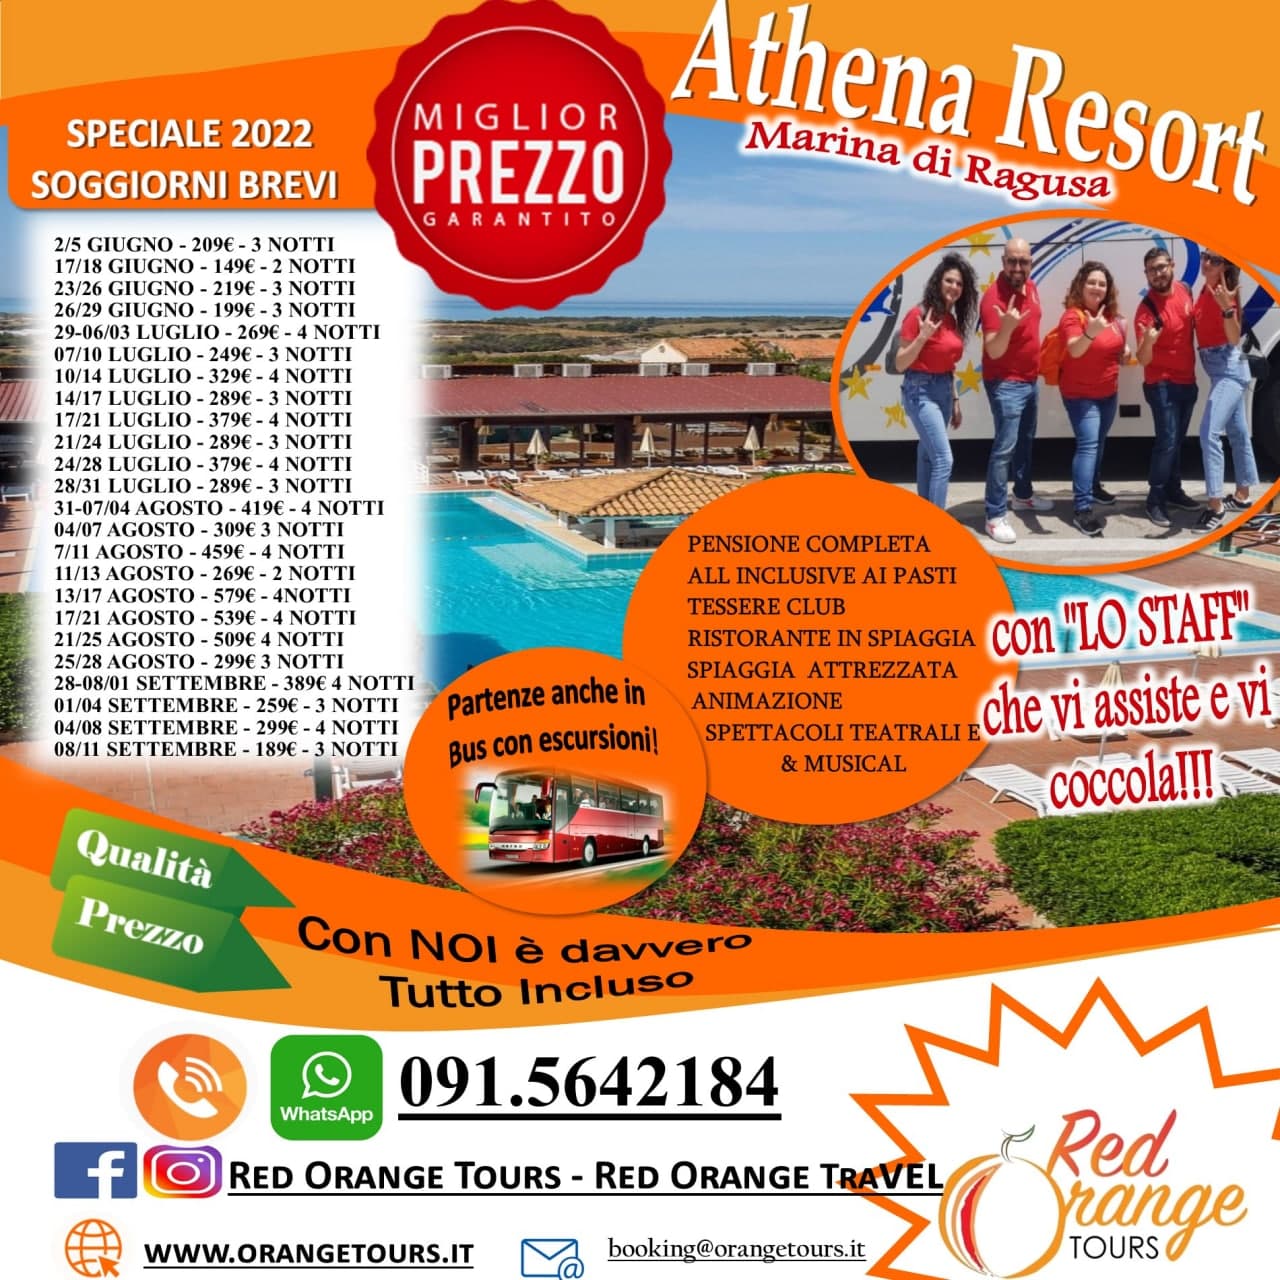 Athena Resort 2022